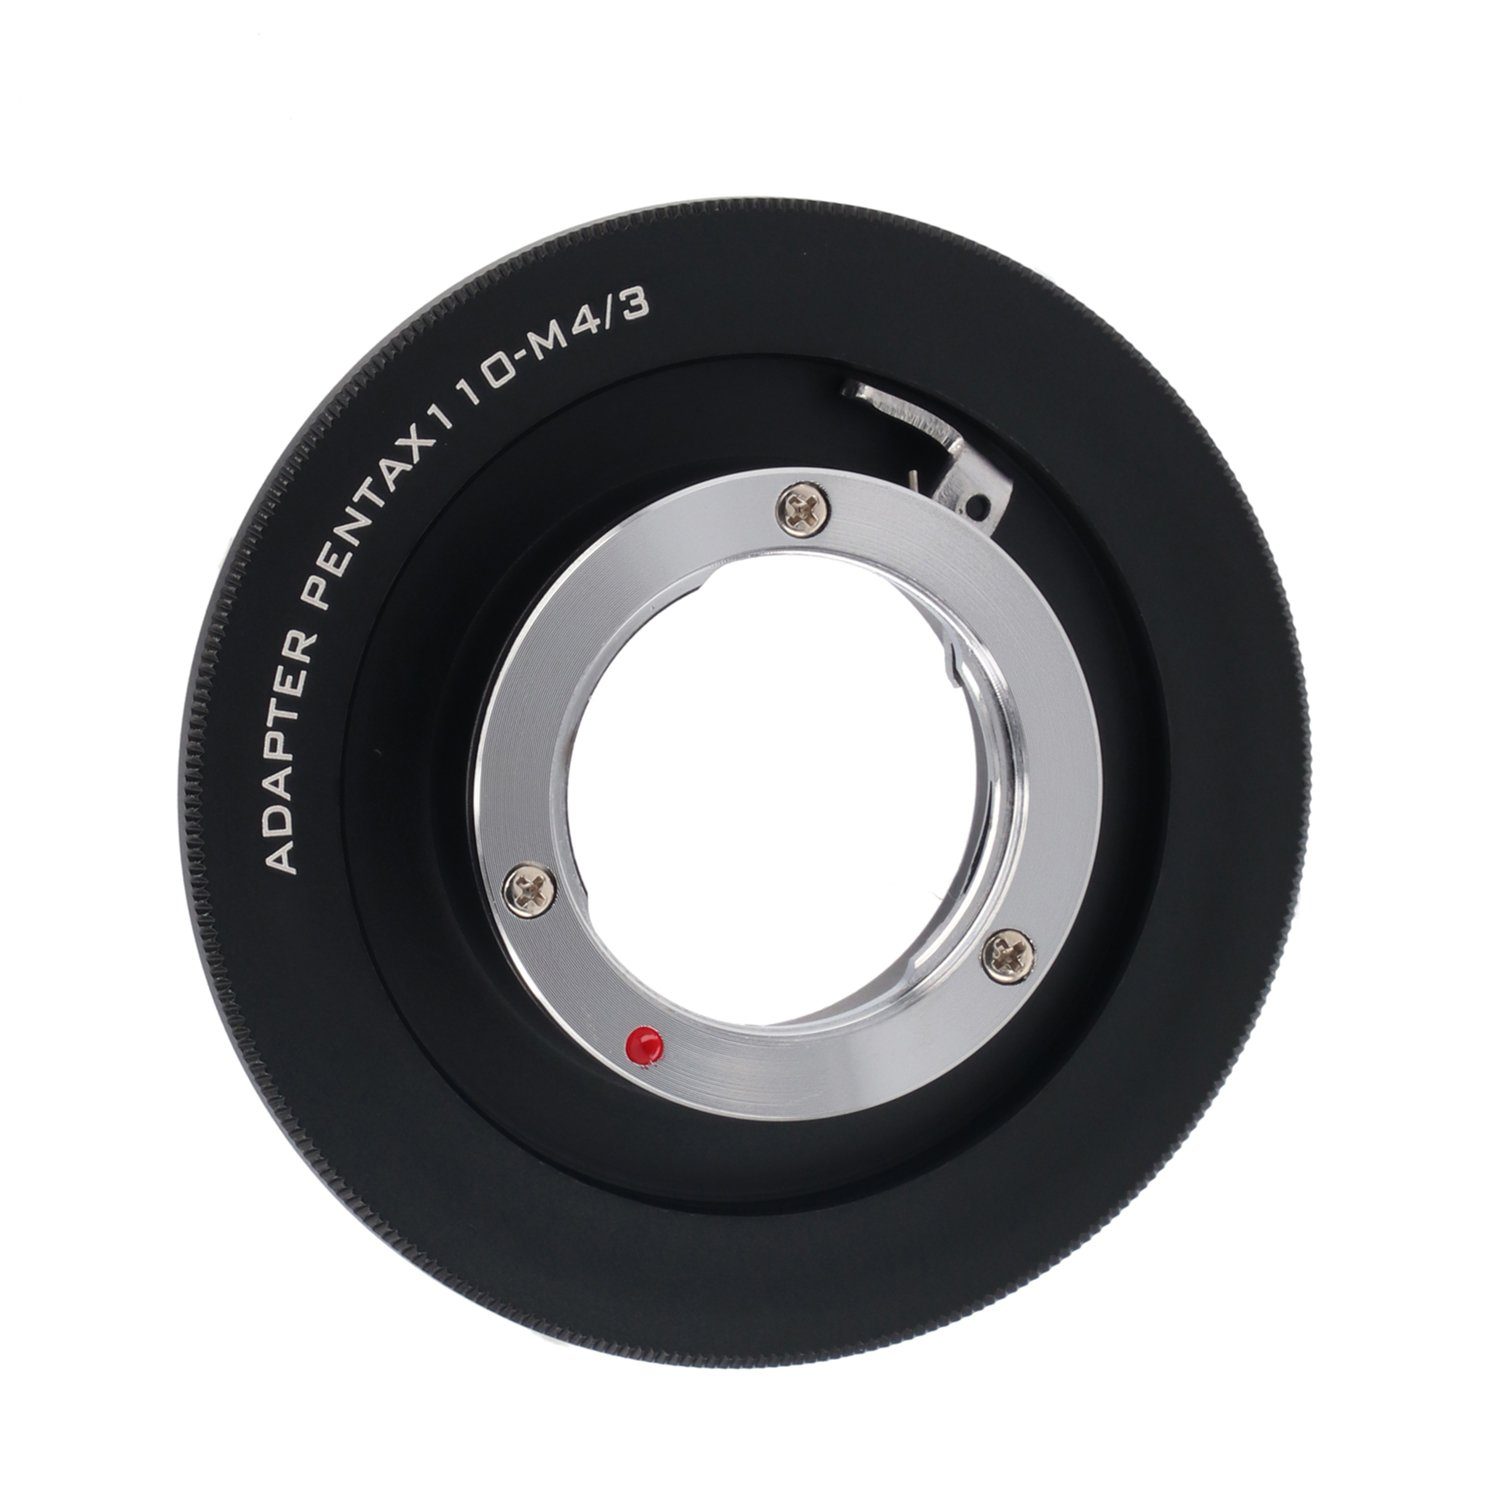 ayex Objektivadapter für Pentax 110 Objektive an Micro 4/3 Kameras Objektiveadapter